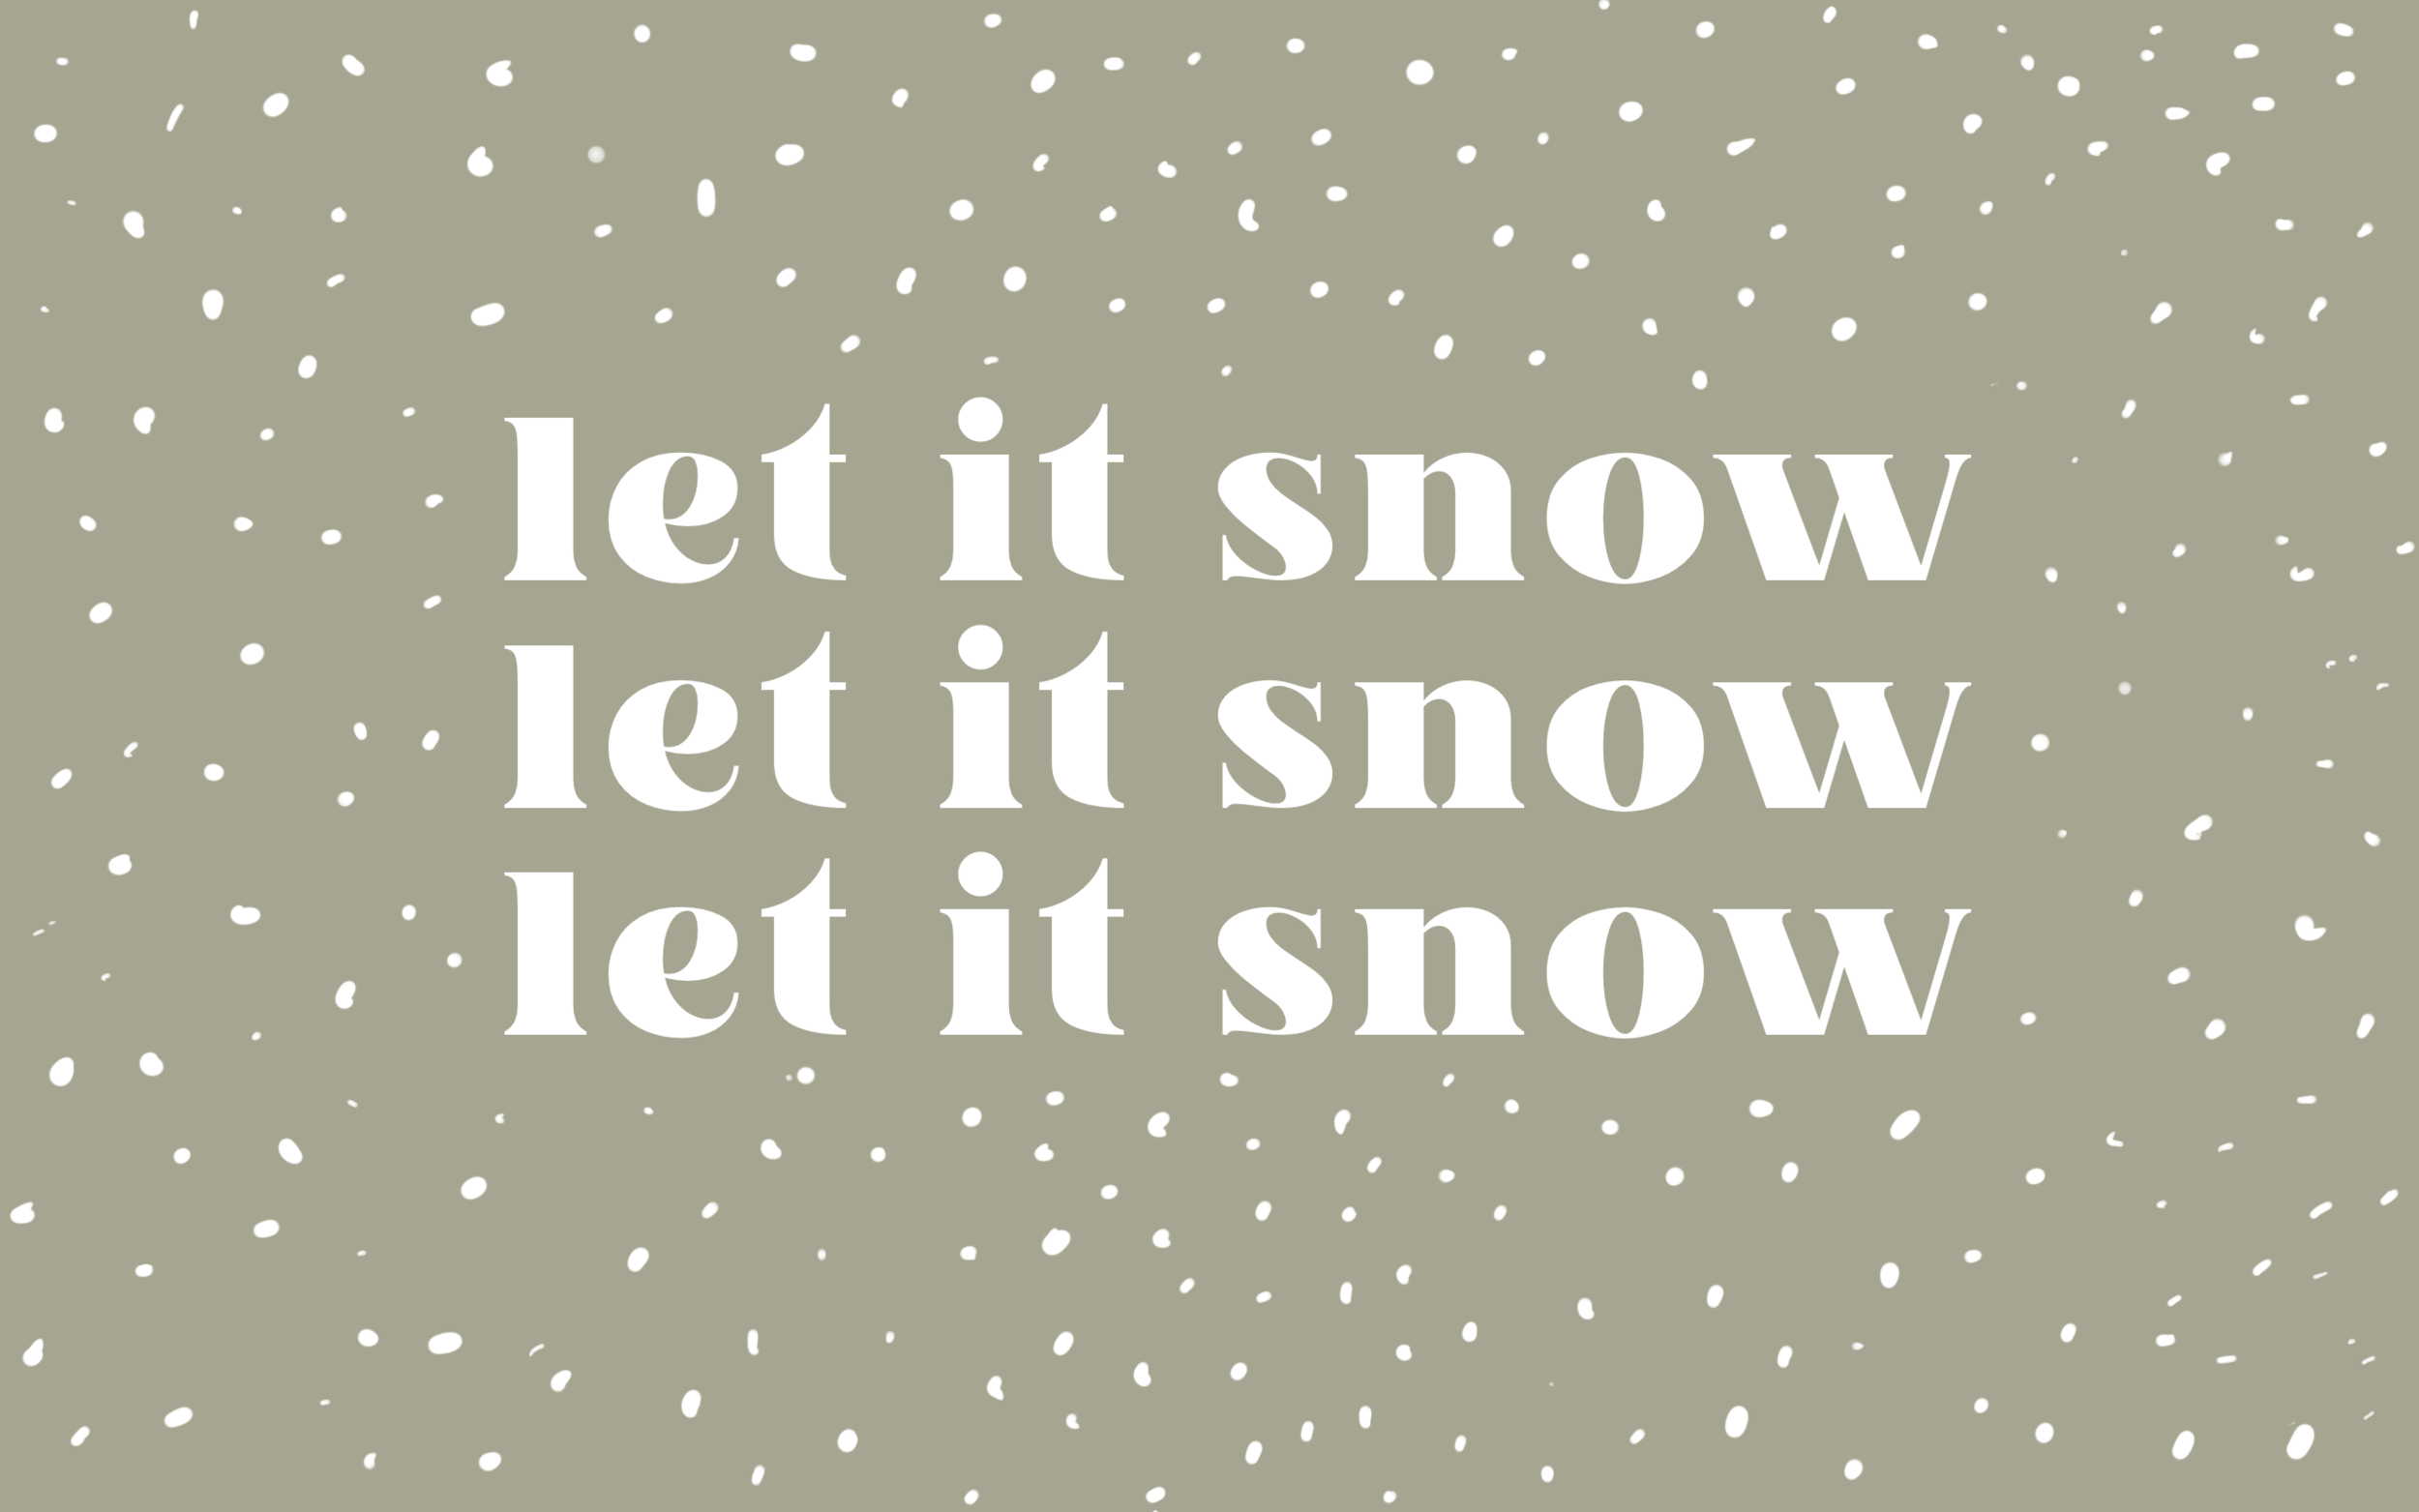 Let it snow - Cute Christmas